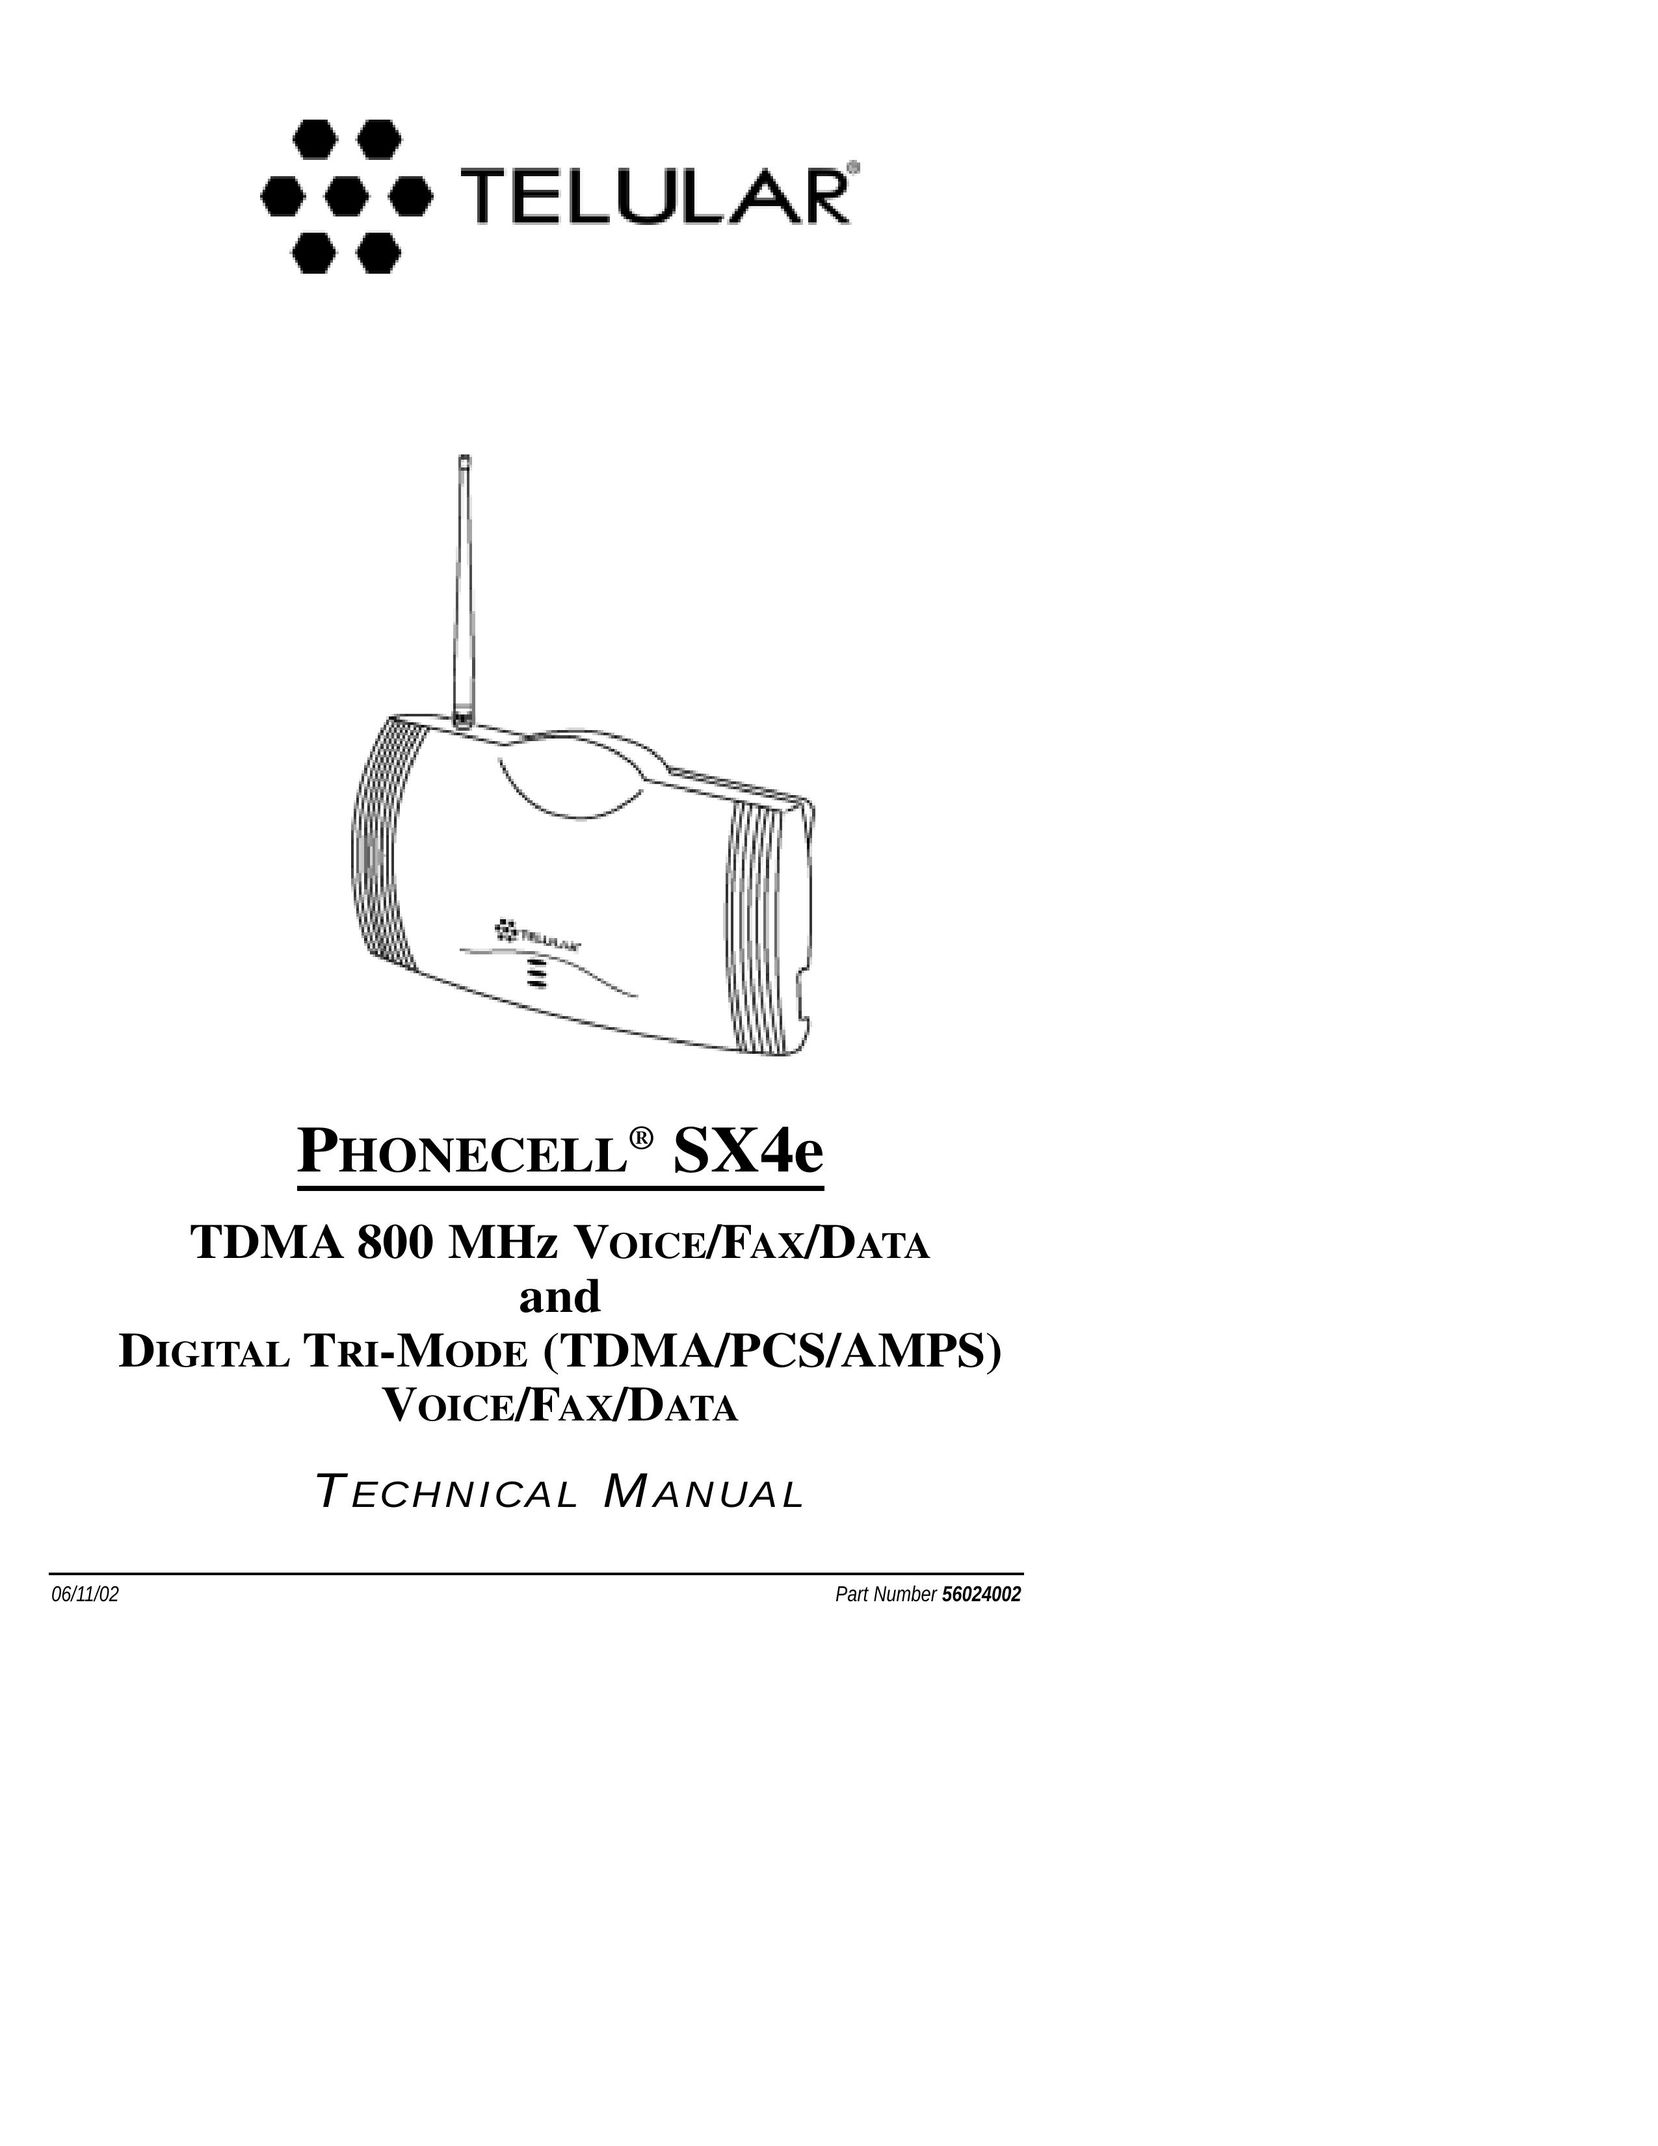 Telular SX4e TDMA Fax Machine User Manual